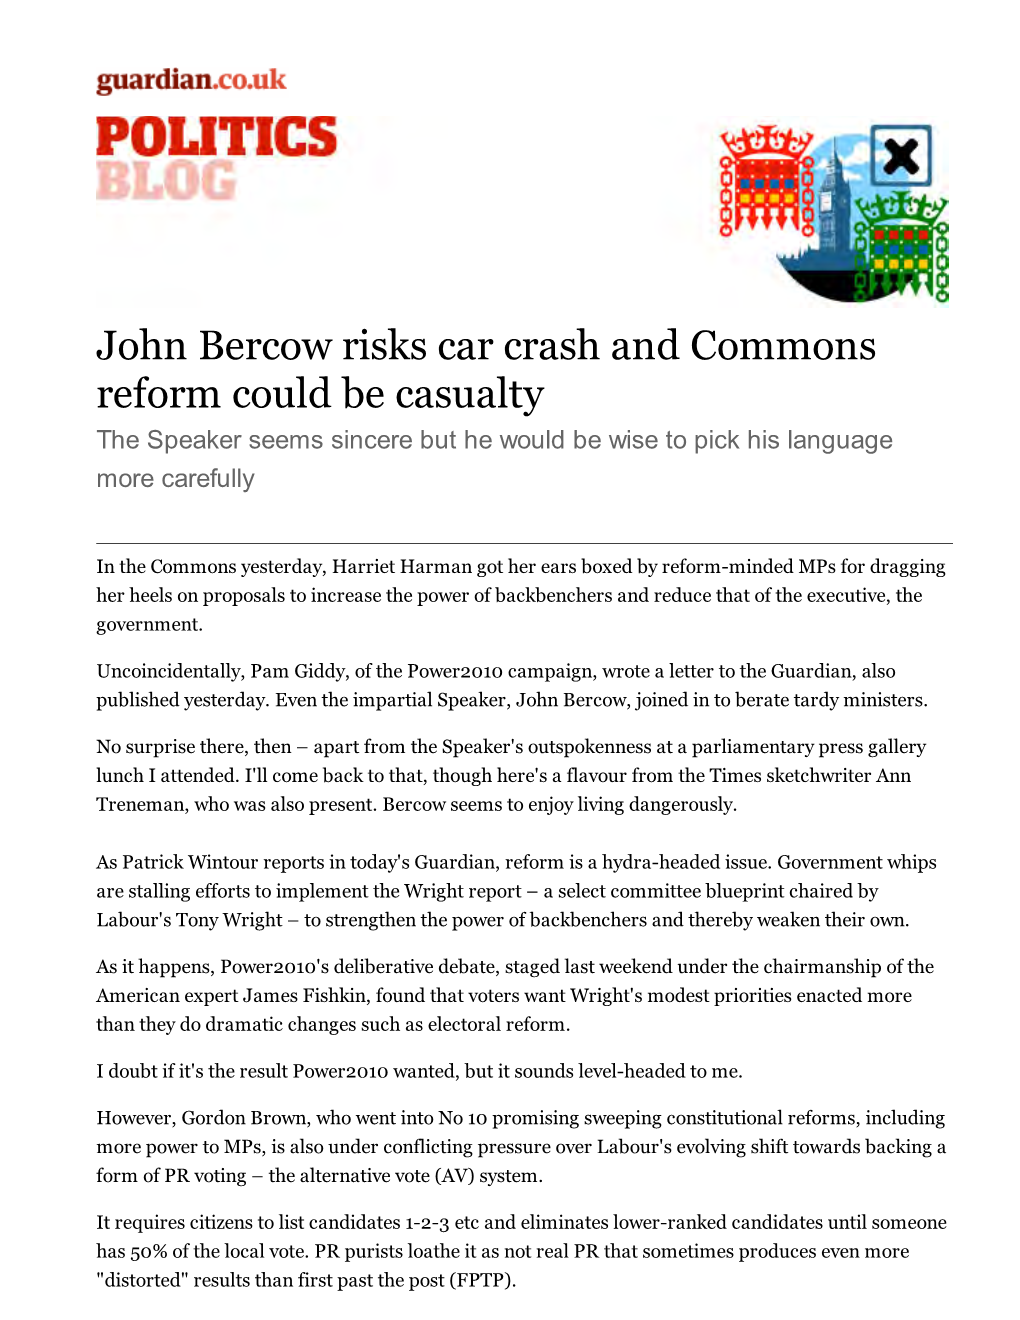 John Bercow Risks Car Crash